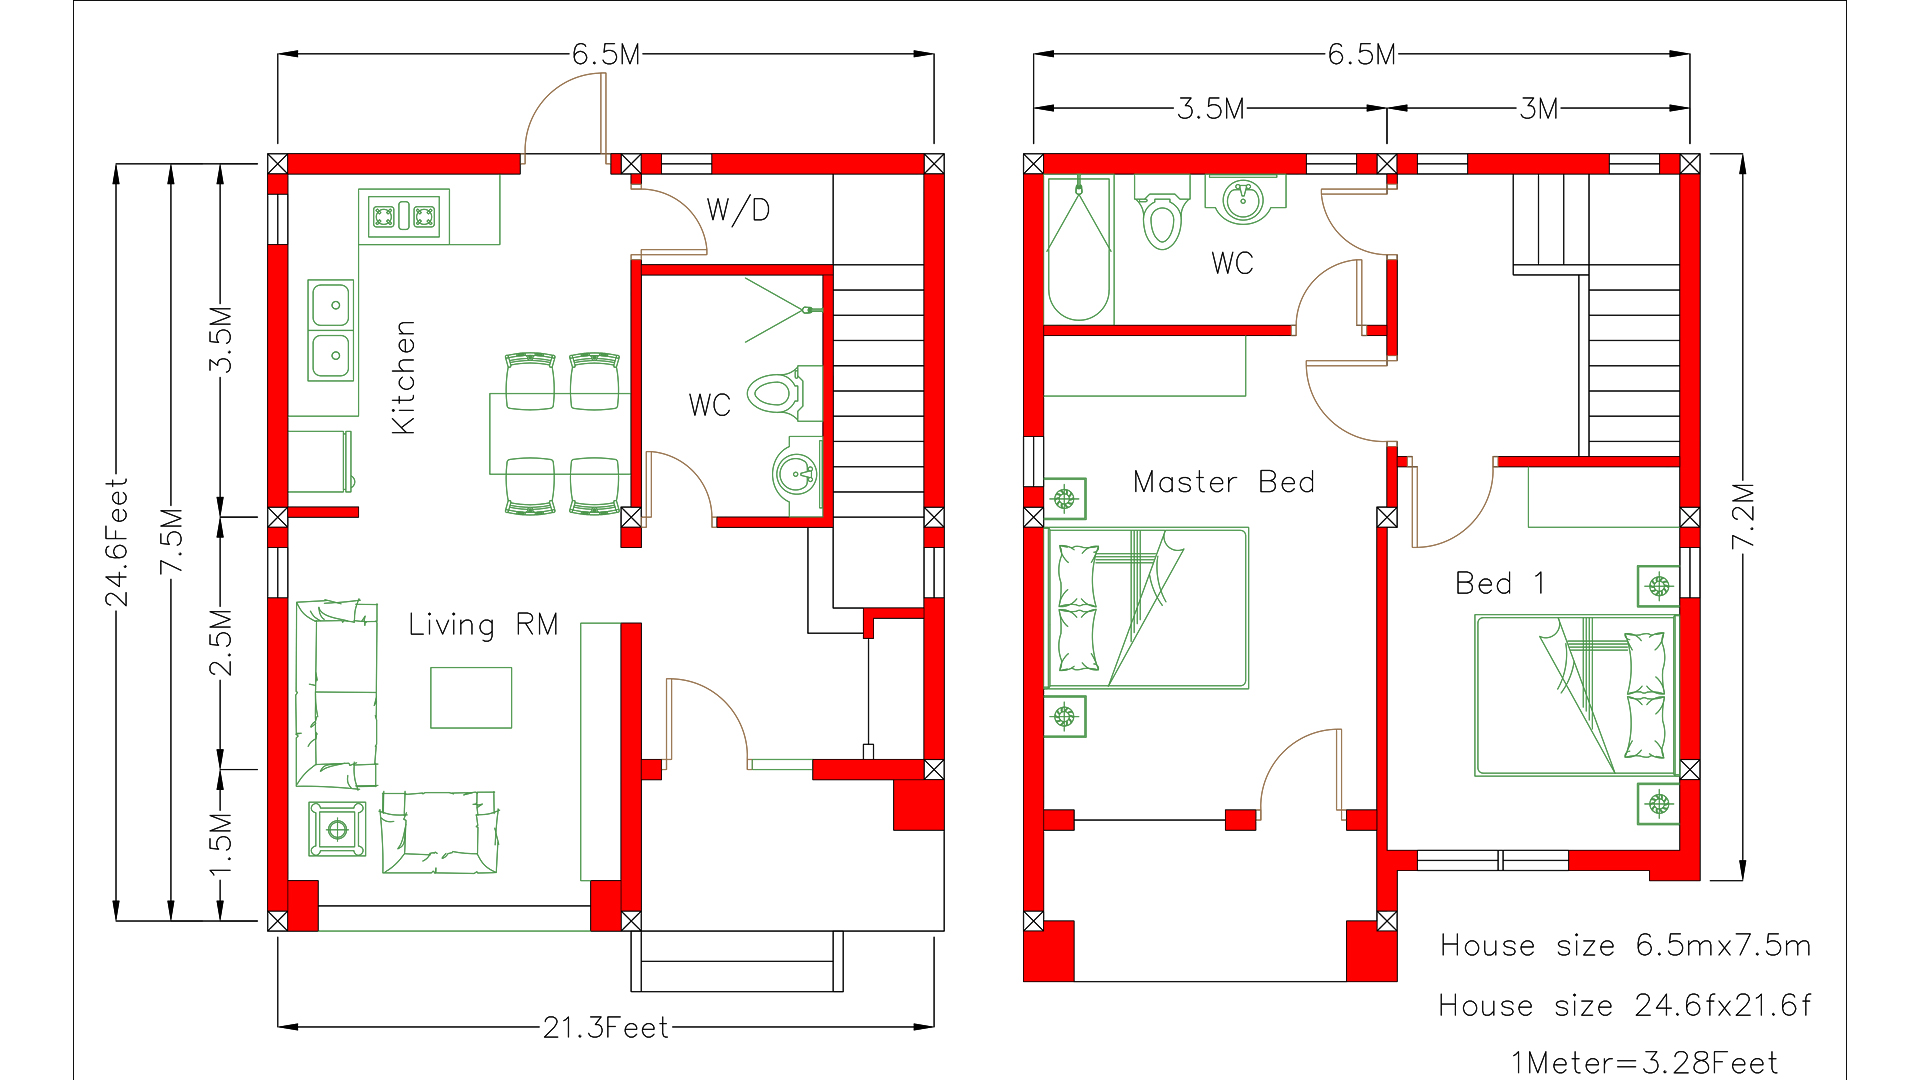 Simple House Plans 6.5x7.5 Meter 22x25 Feet 2 Beds layout floor plan